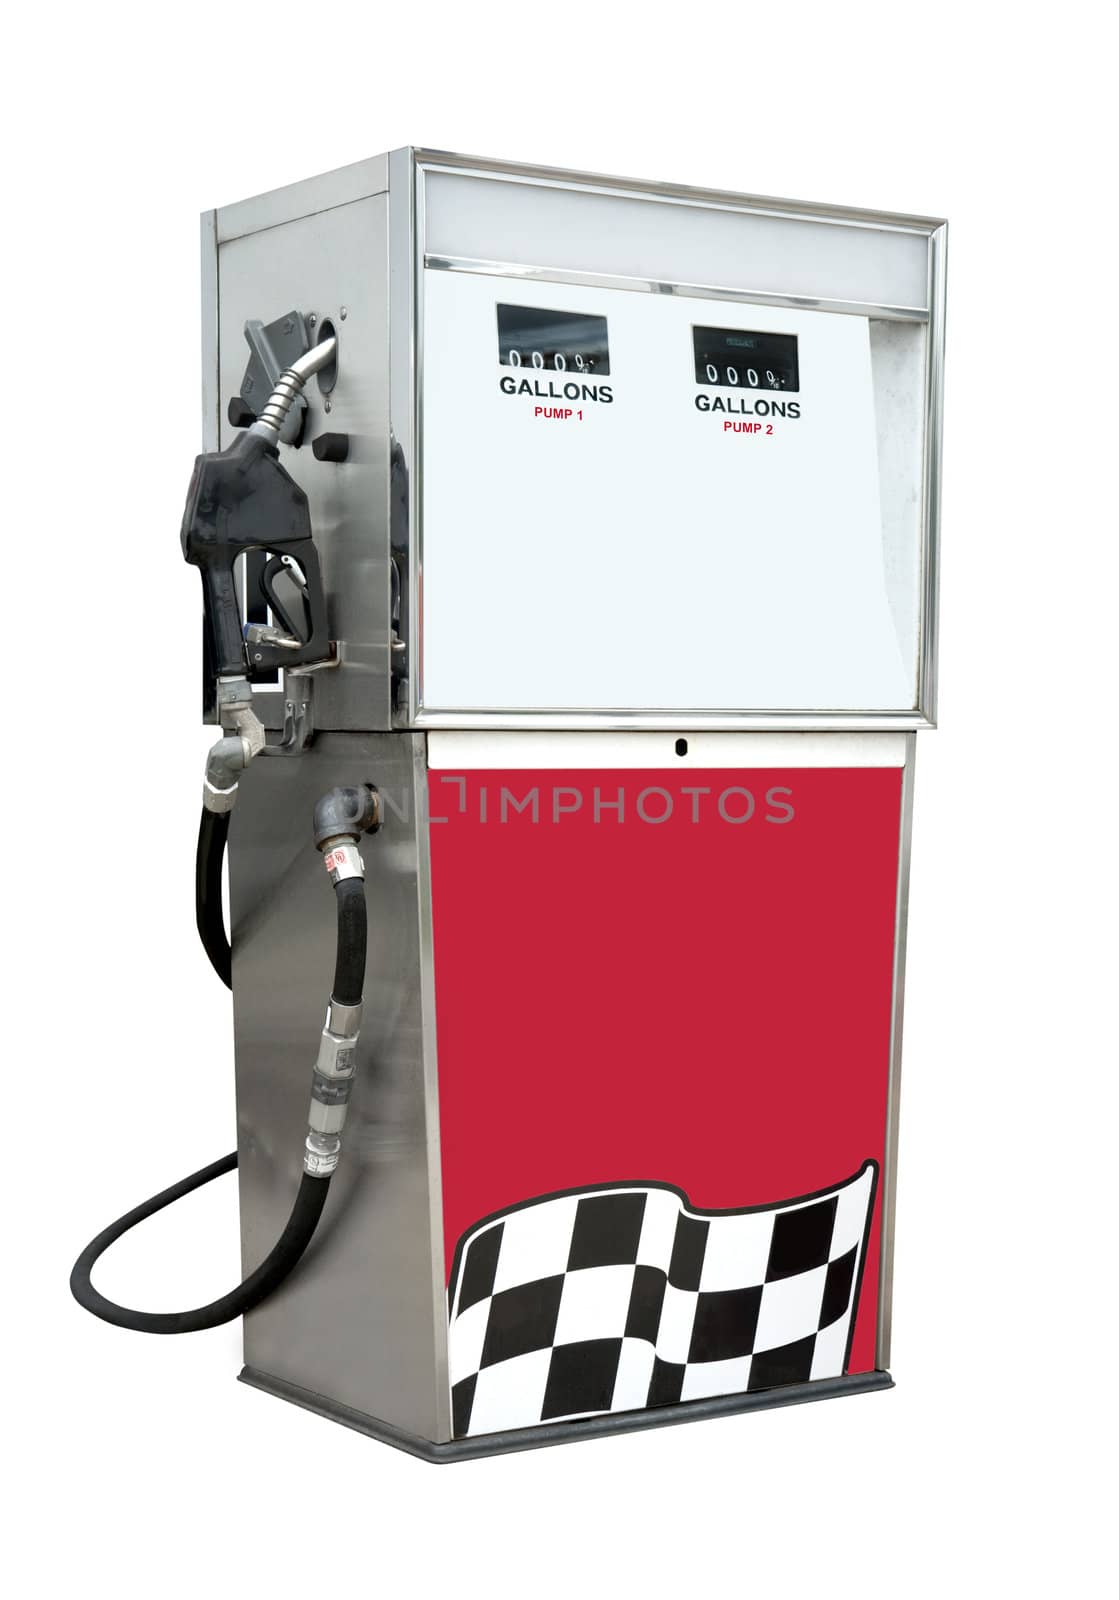 Gasoline pump by f/2sumicron